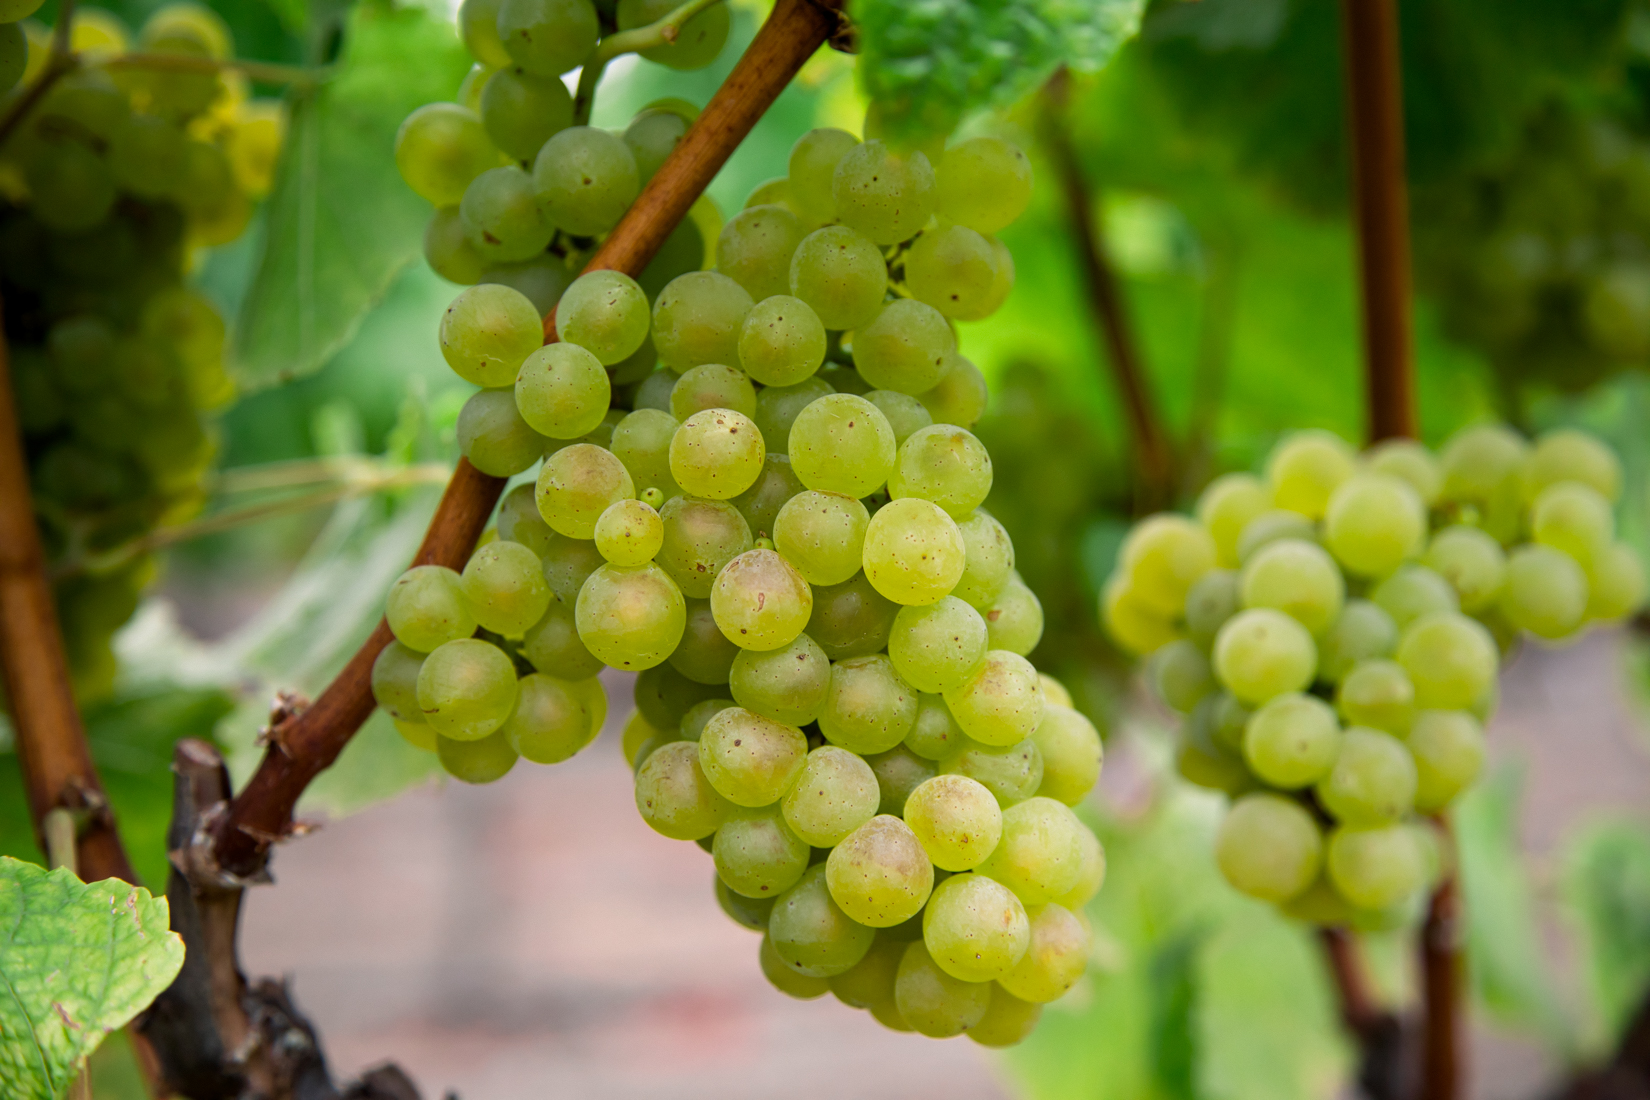 chardonnay grape clusters hanging on vineyard